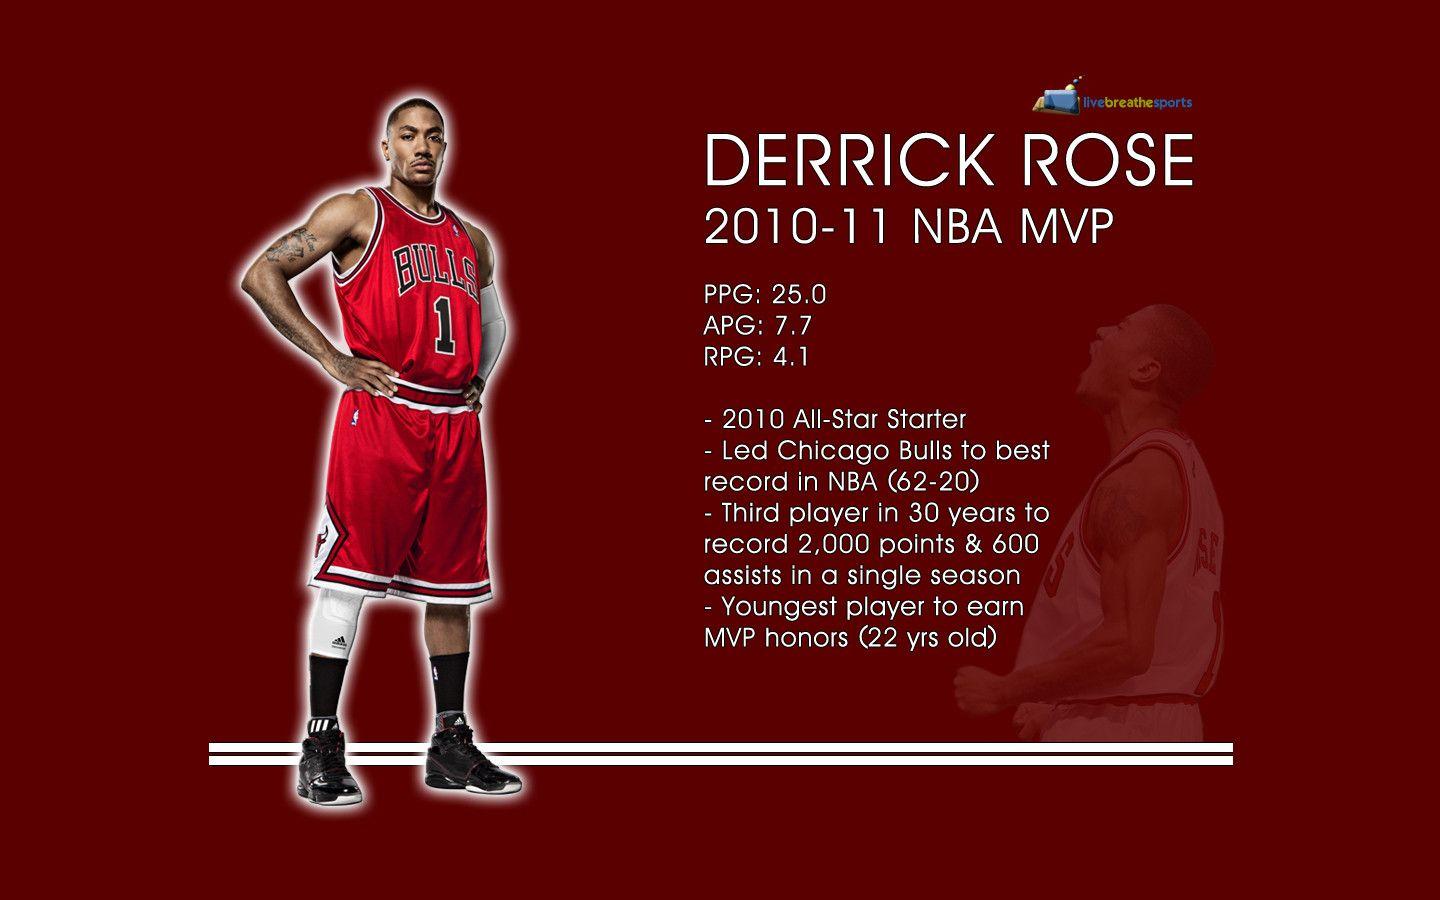 Derrick Rose MVP Desktop Wallpaper. Live. Breathe. Sports